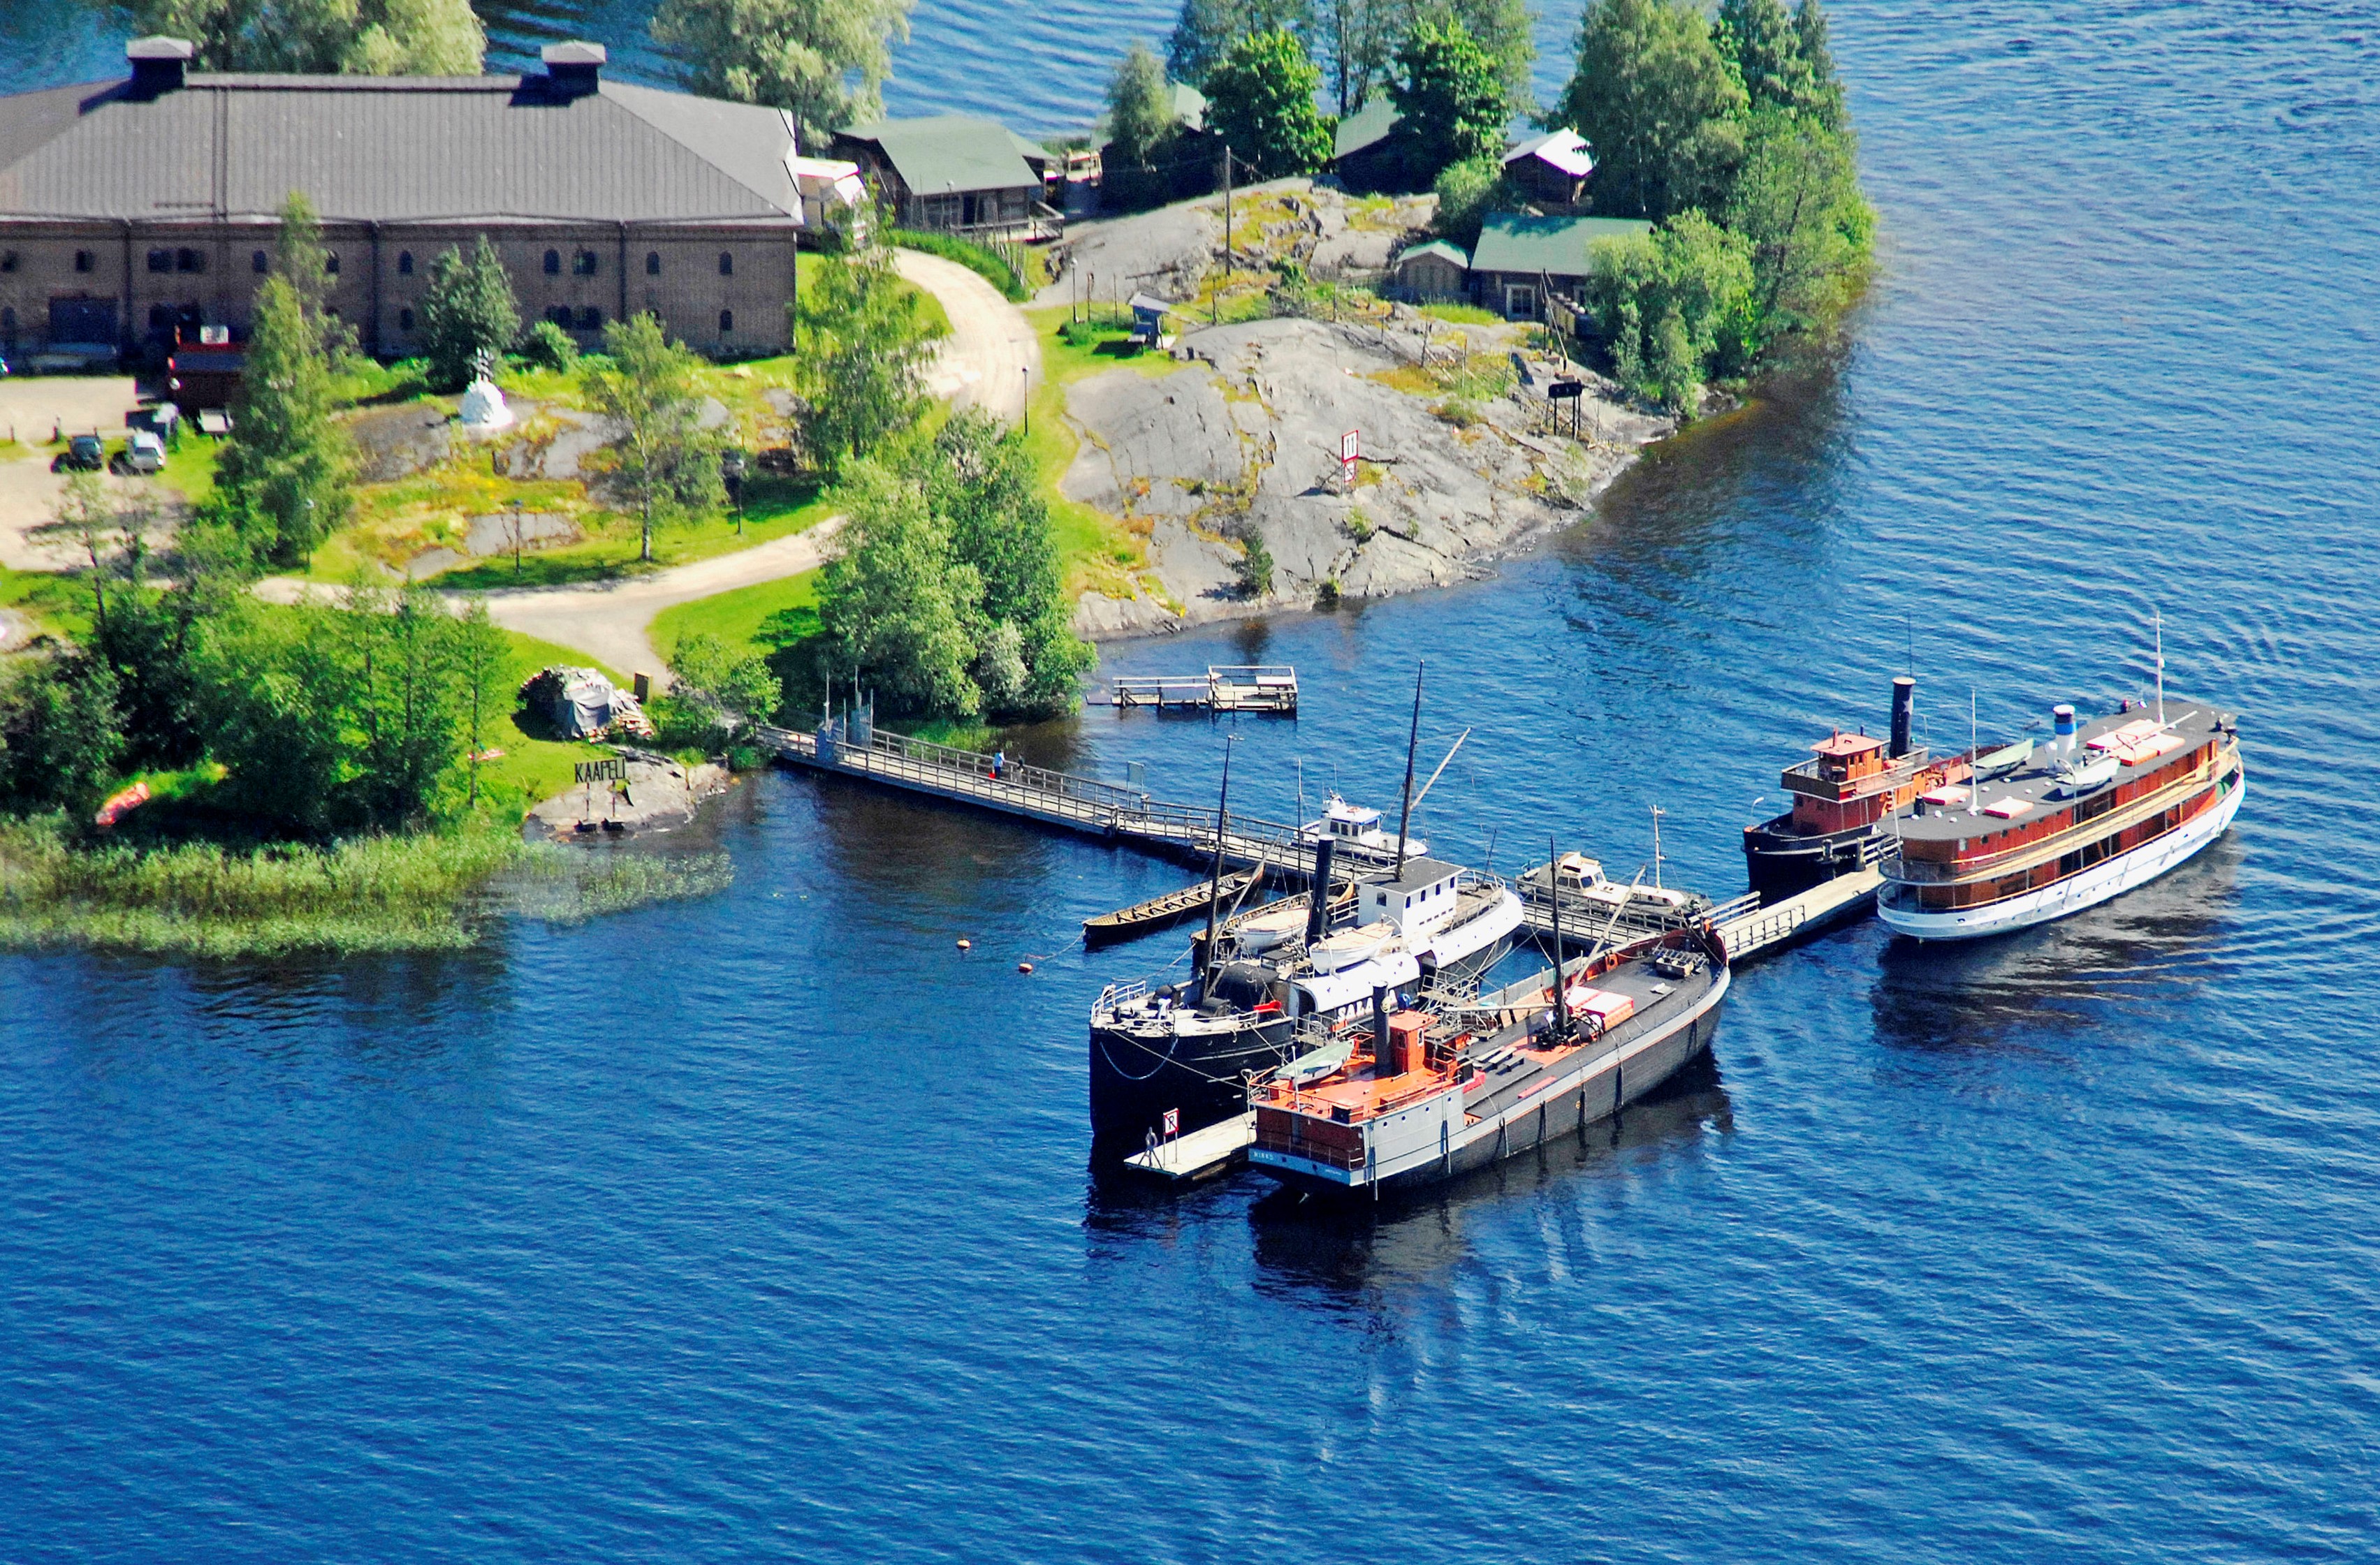 Riihisaari – Lake Saimaa Nature and Culture Centre